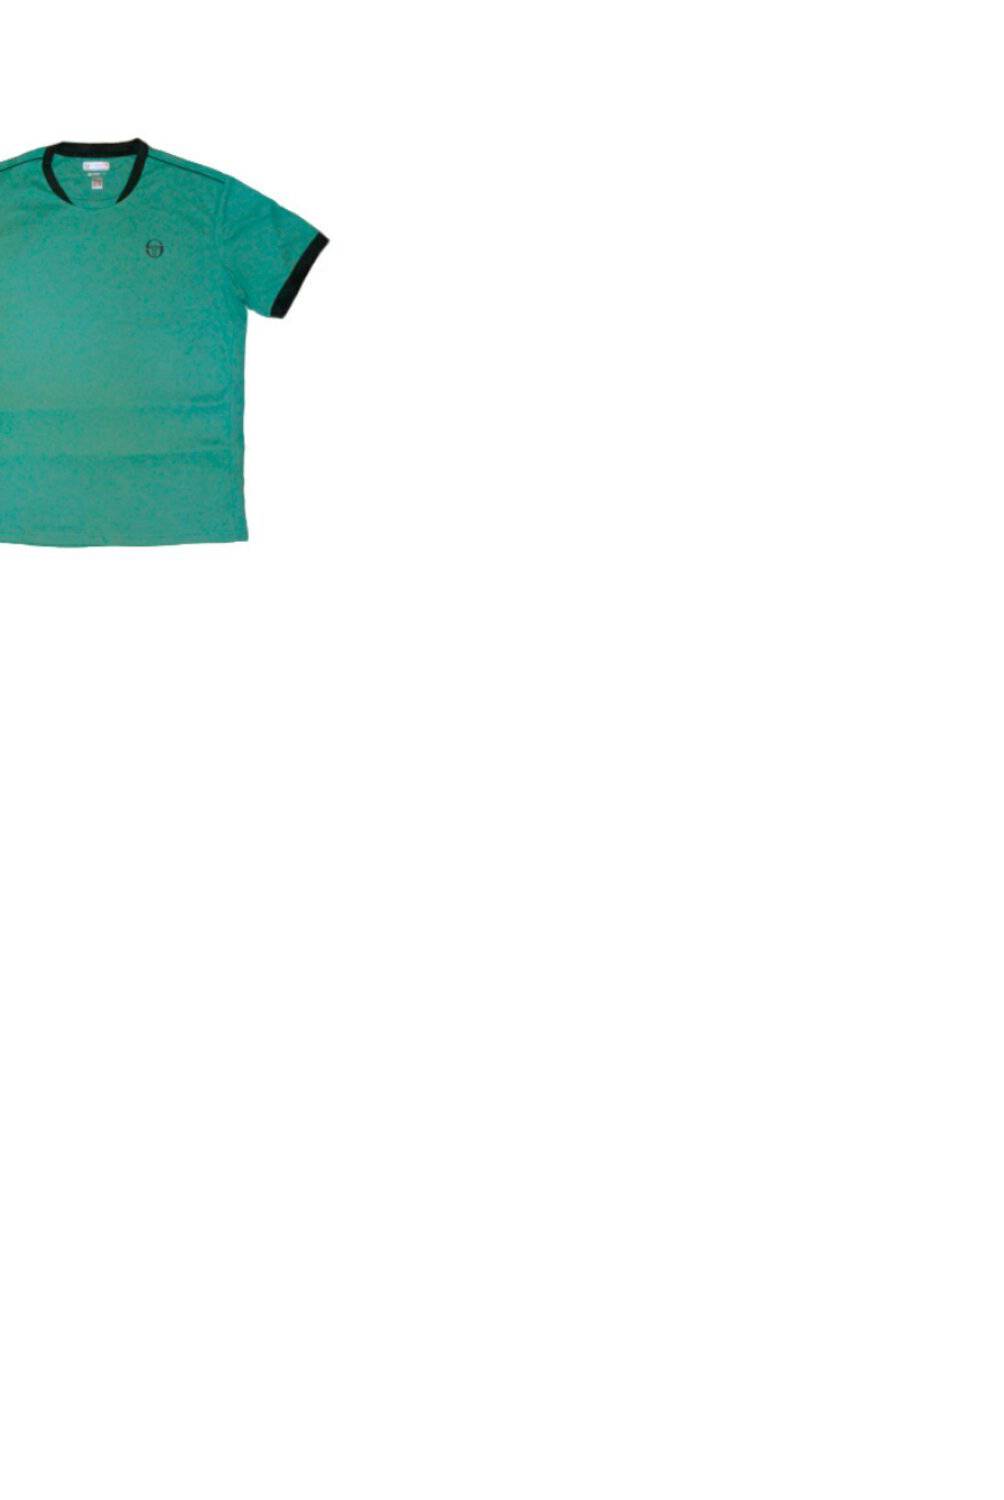 SERGIO TACCHINI - Club Tech T-Shirt Verde/ Azul Marino